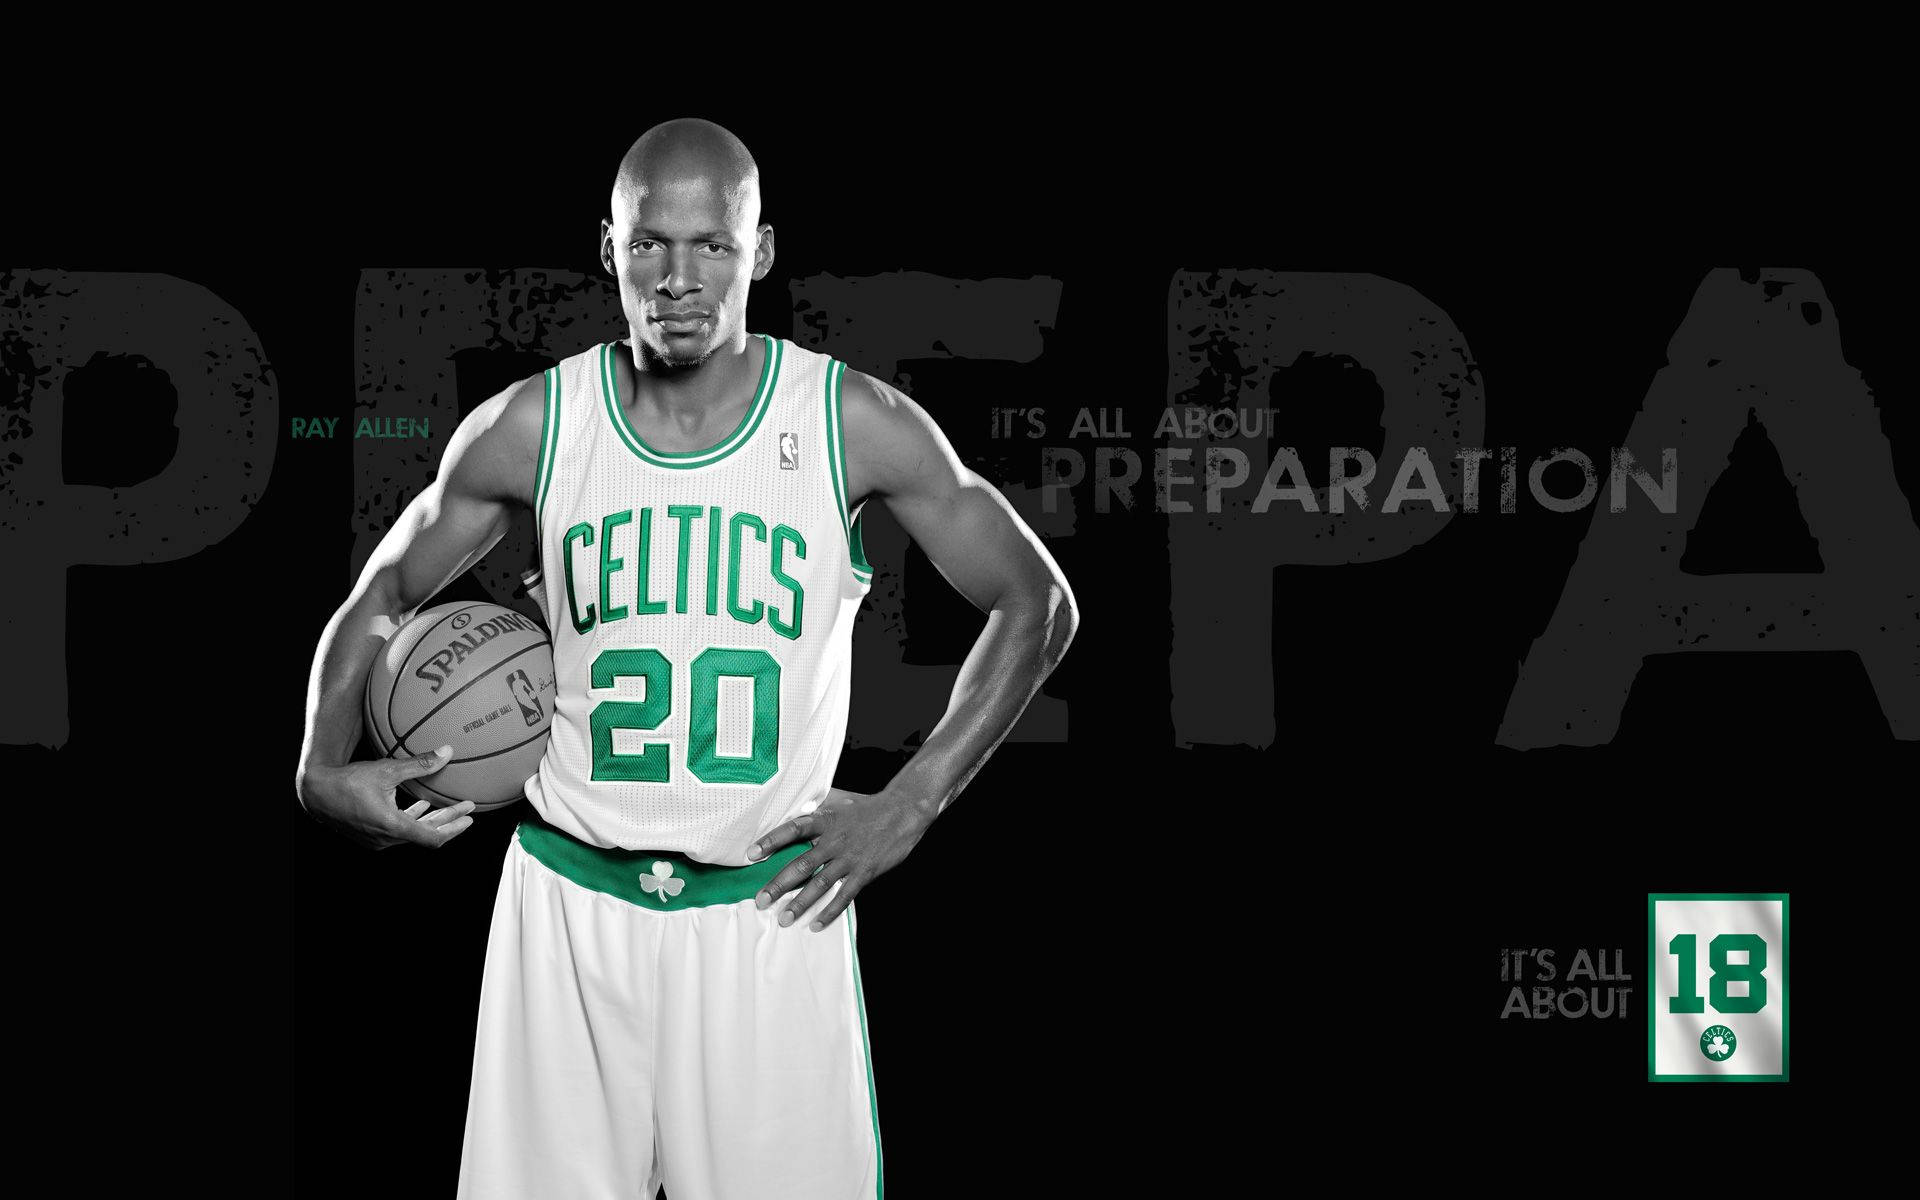 Ray Allen Celtics Preparation Background